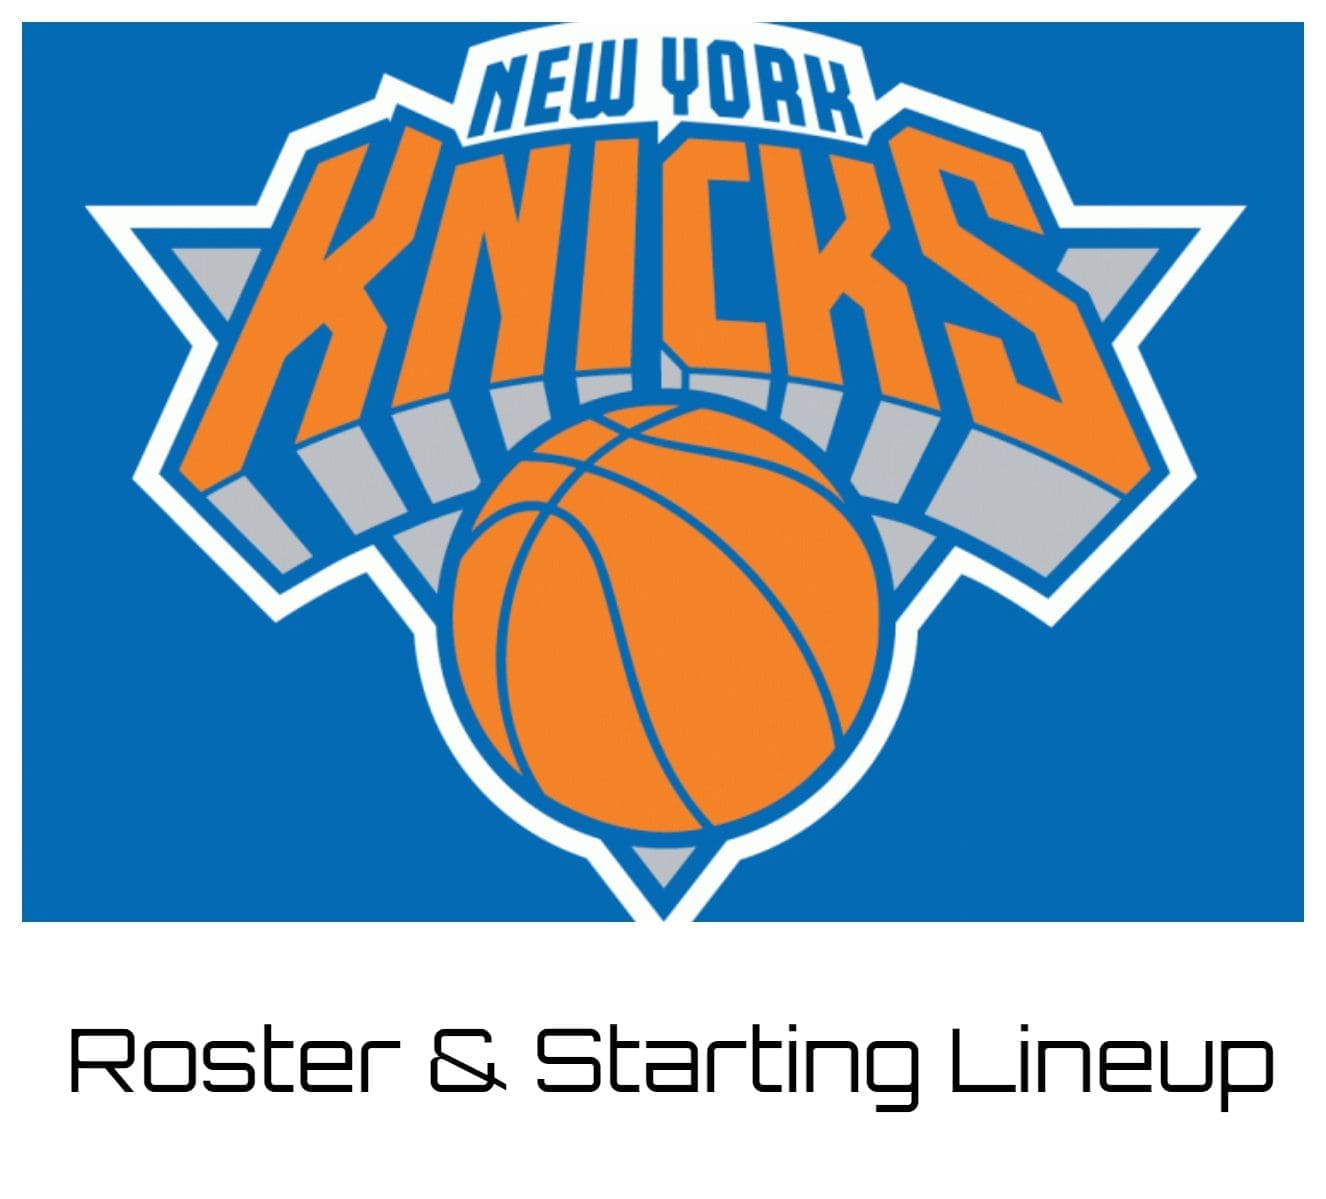 New York Knicks Roster